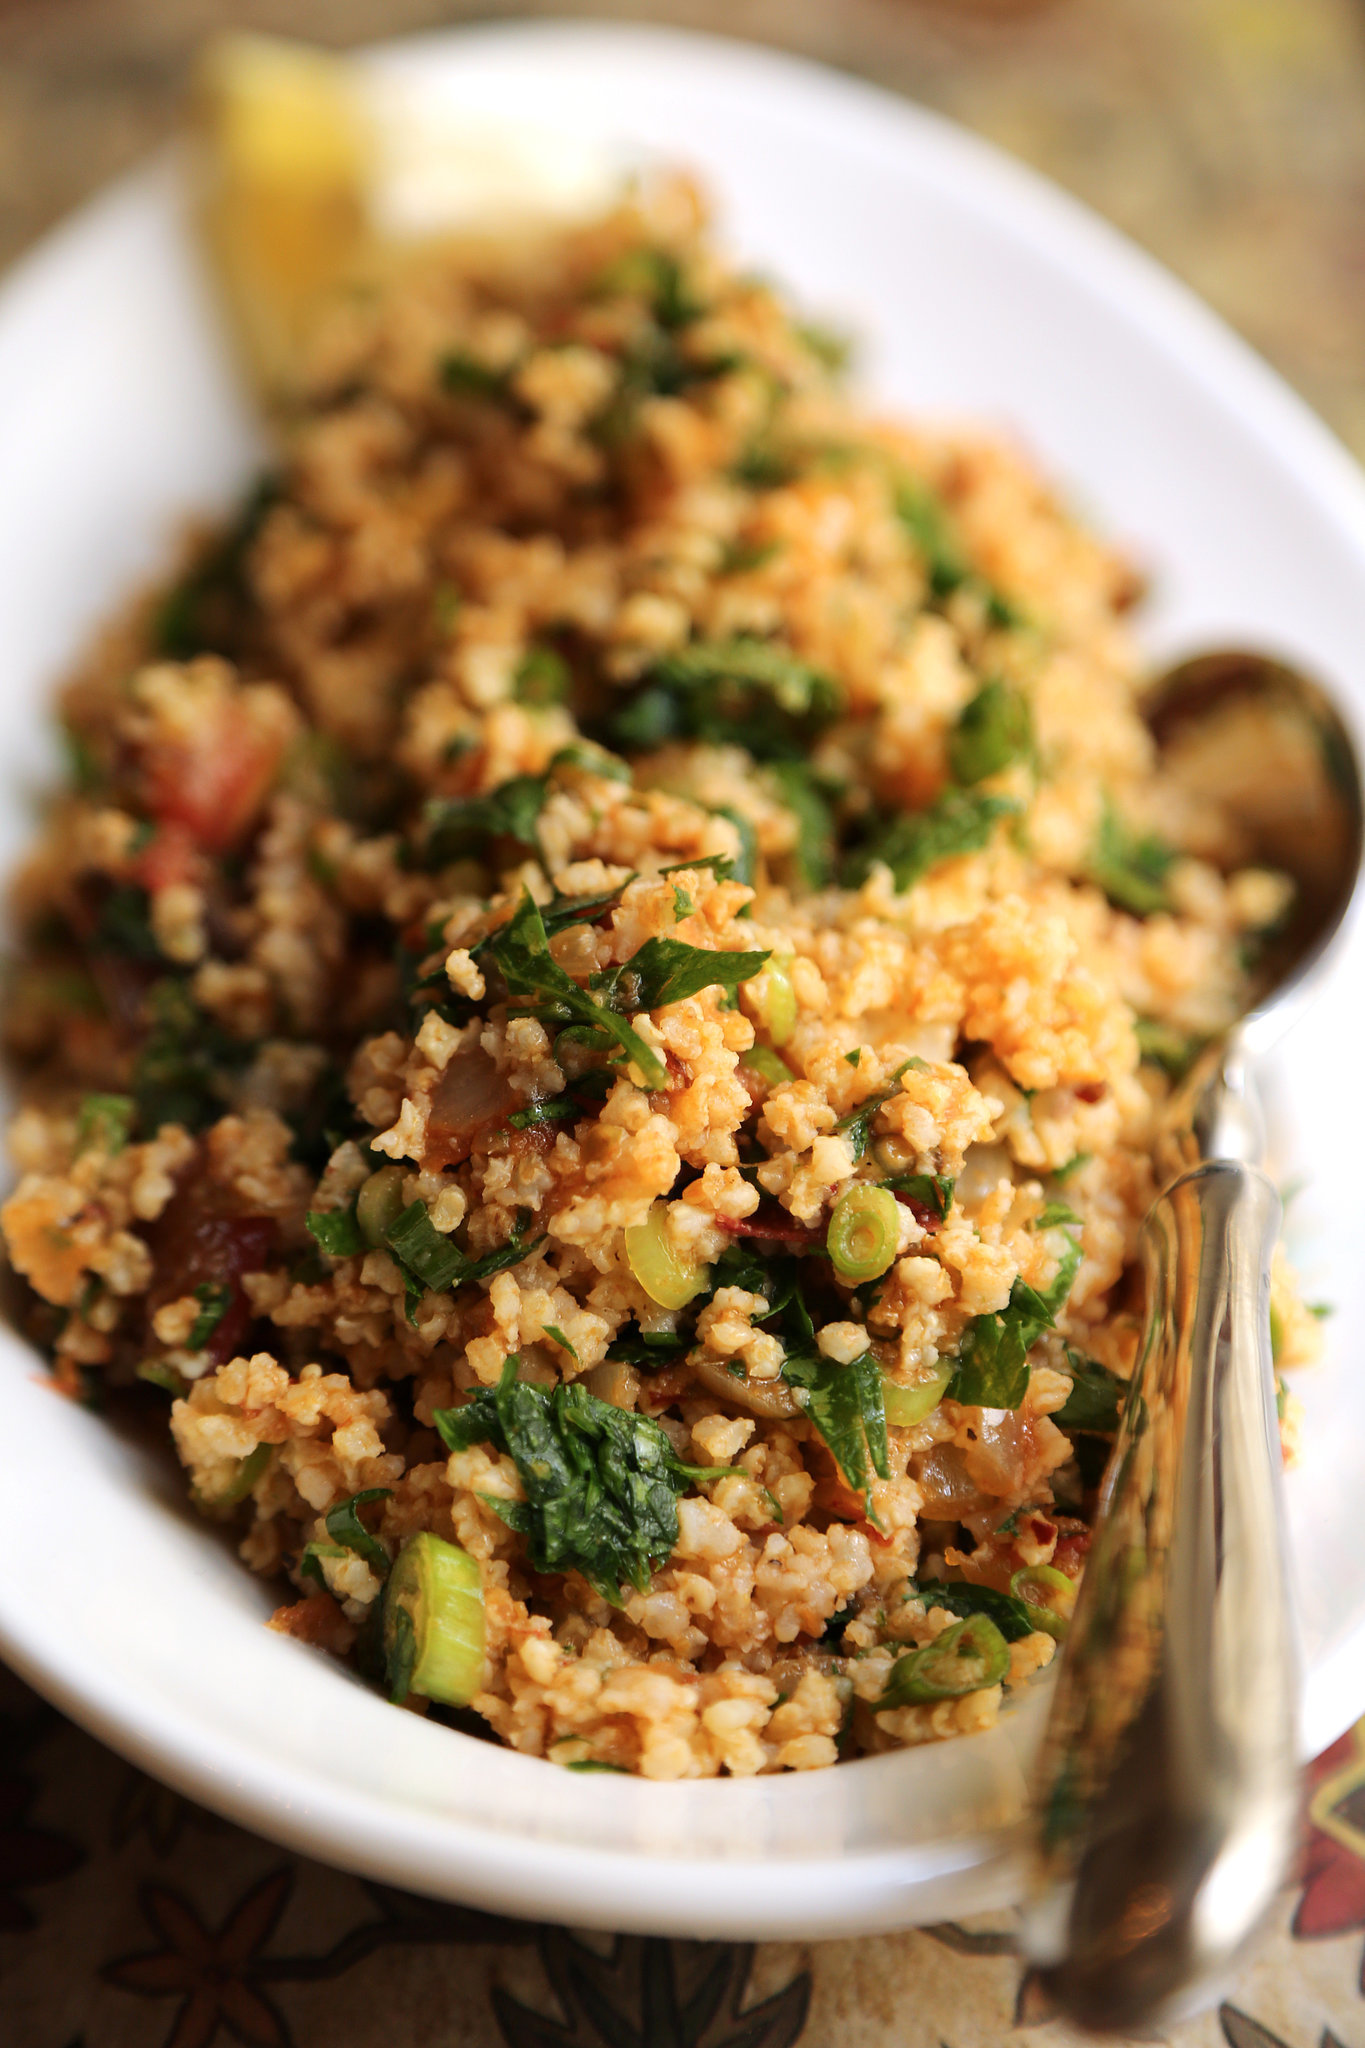 Lunch Recipes Quinoa - LANCH RICIPES